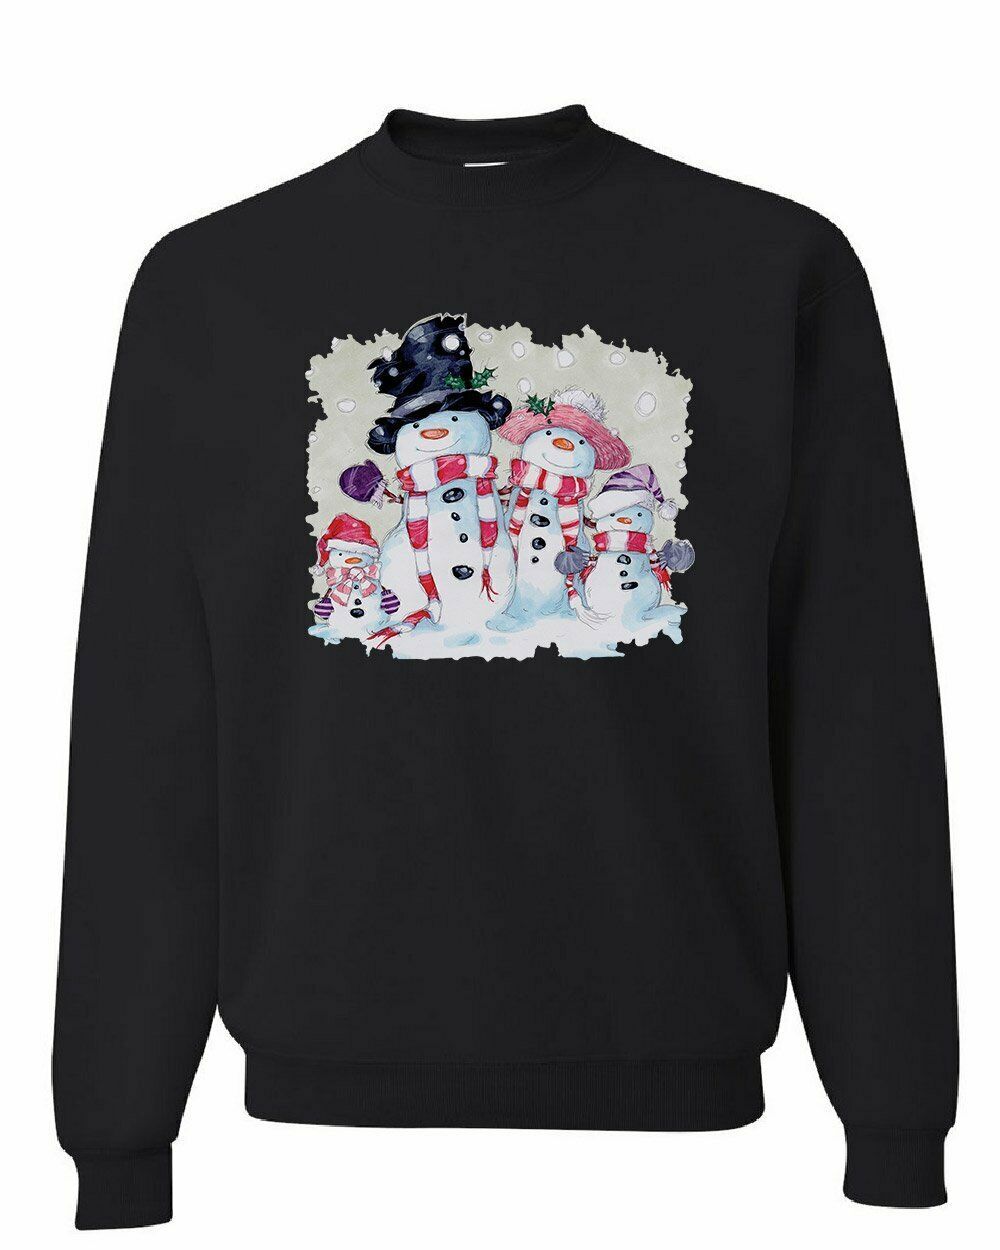 Snowman Family Ugly Christmas Sweatshirt Style: Sweatshirt, Color: Black